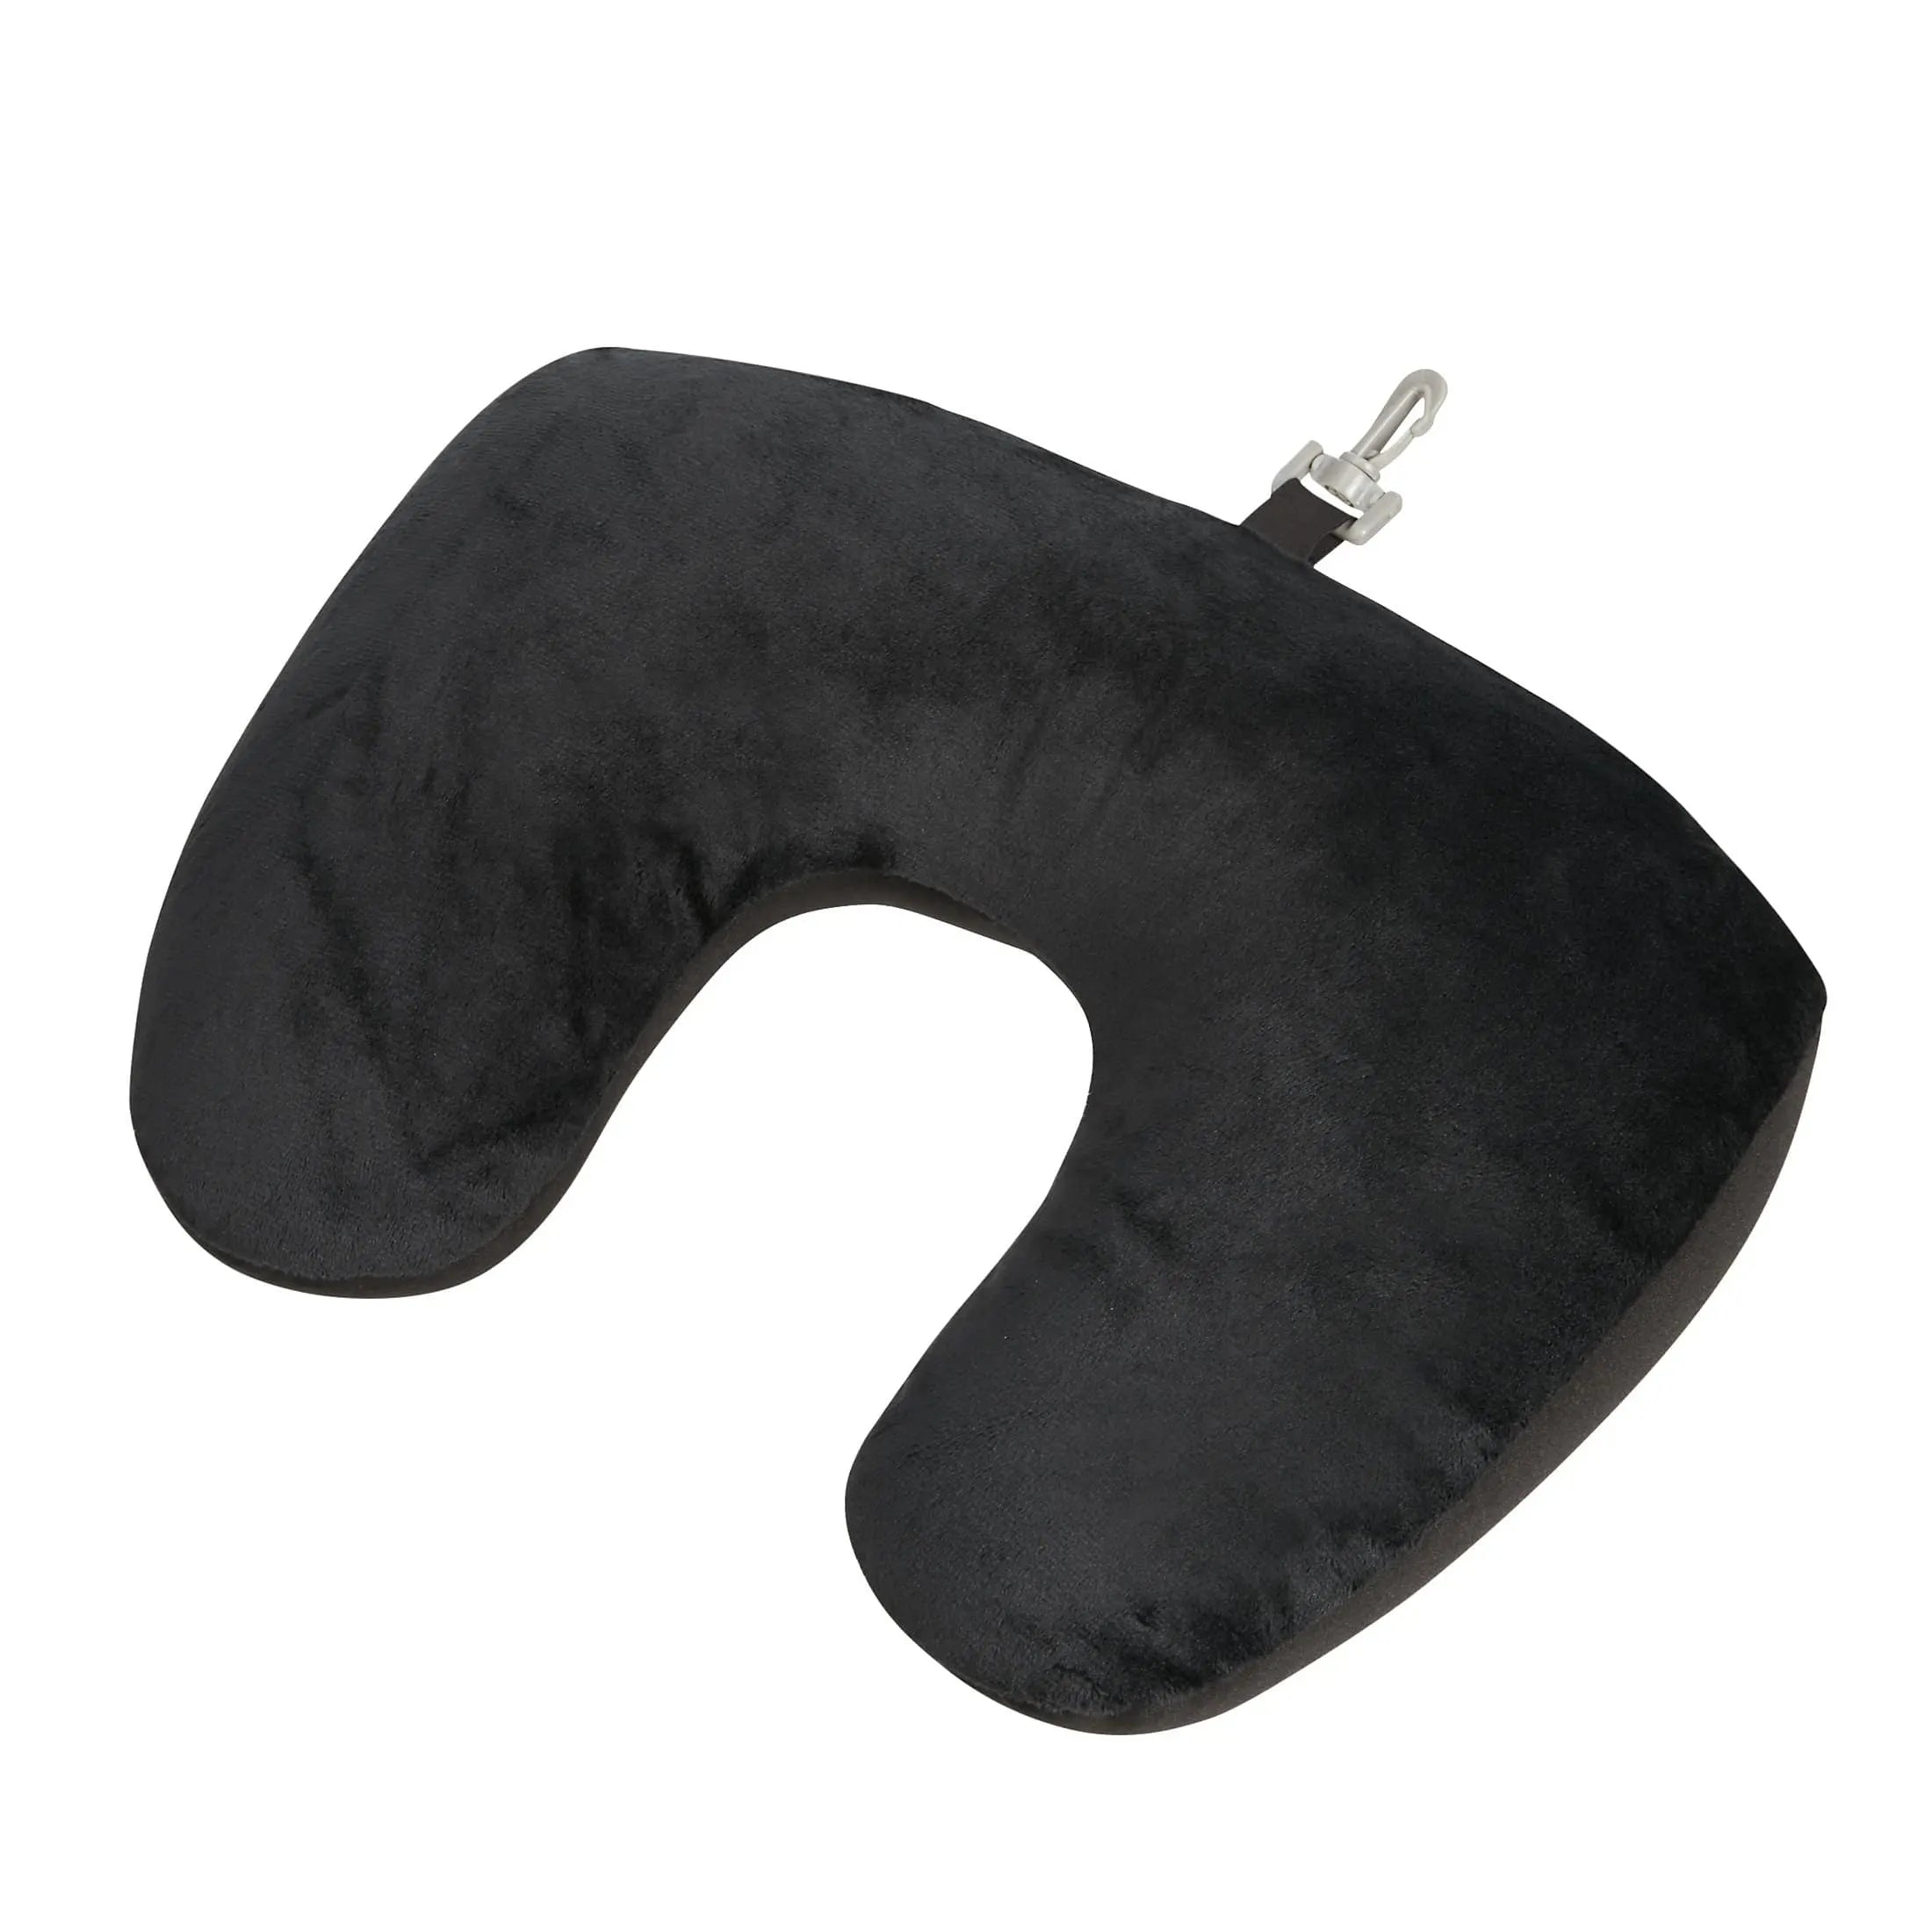 Samsonite Travel Accessories Reversible travel pillow - black